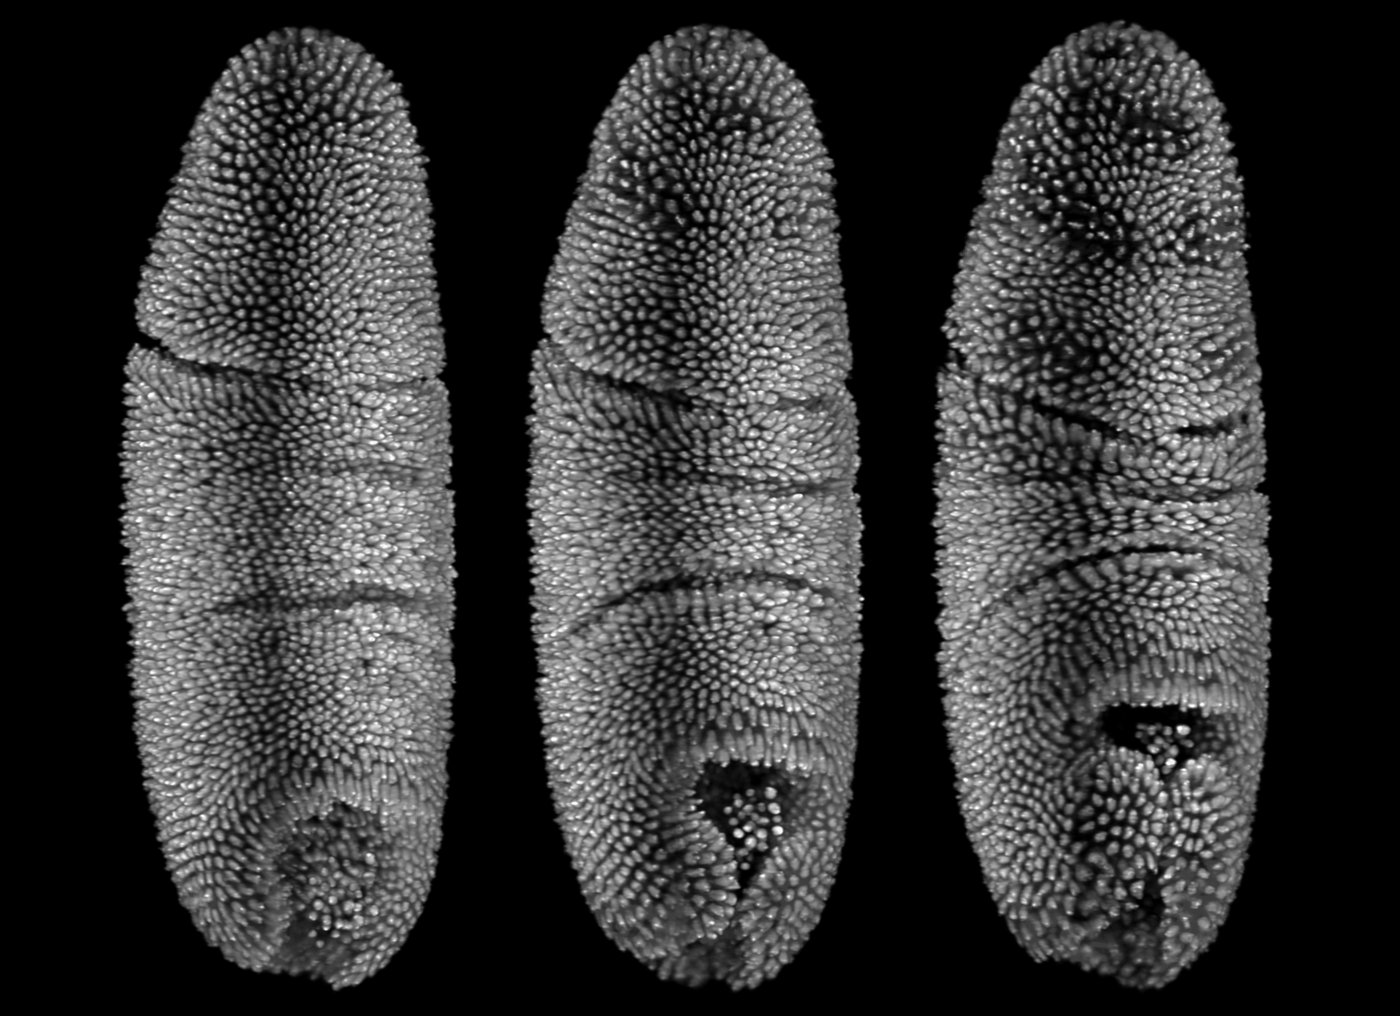 Fruit fly embryonic development